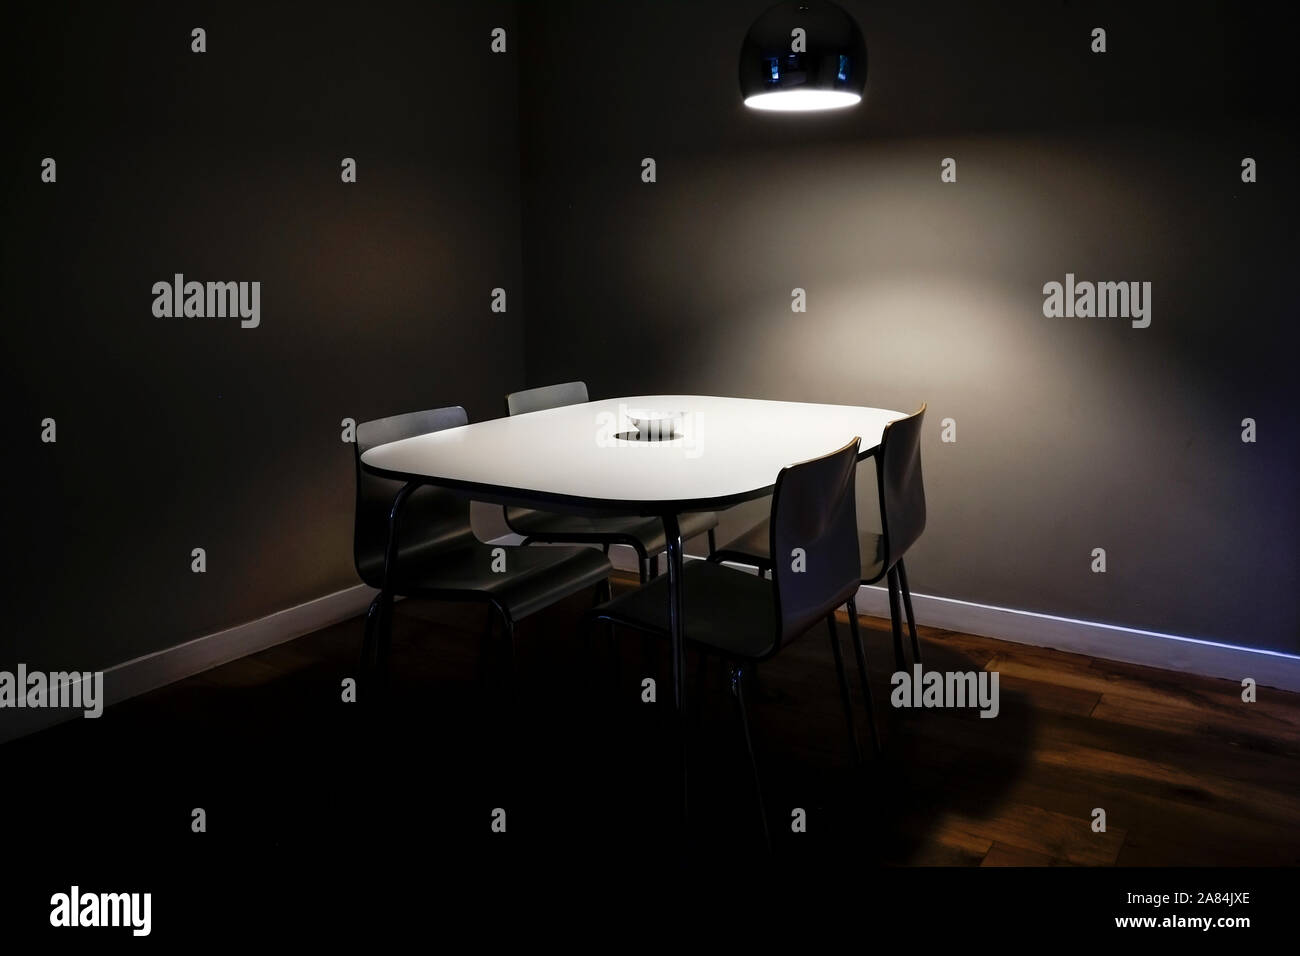 Luz cenital fotografías e imágenes de alta resolución - Alamy